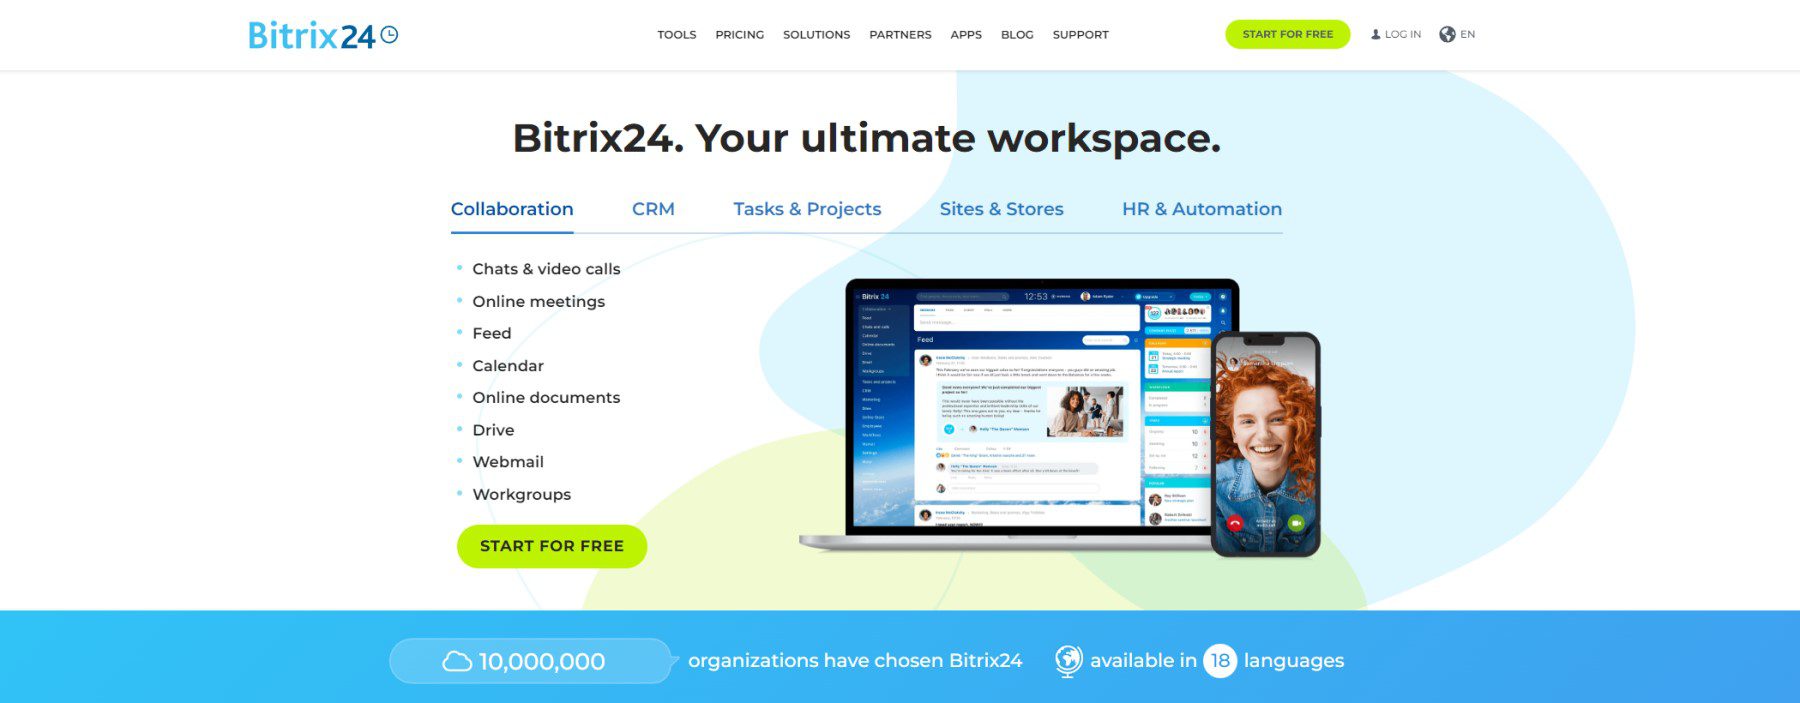 Bitrix24 CRM Homepage View